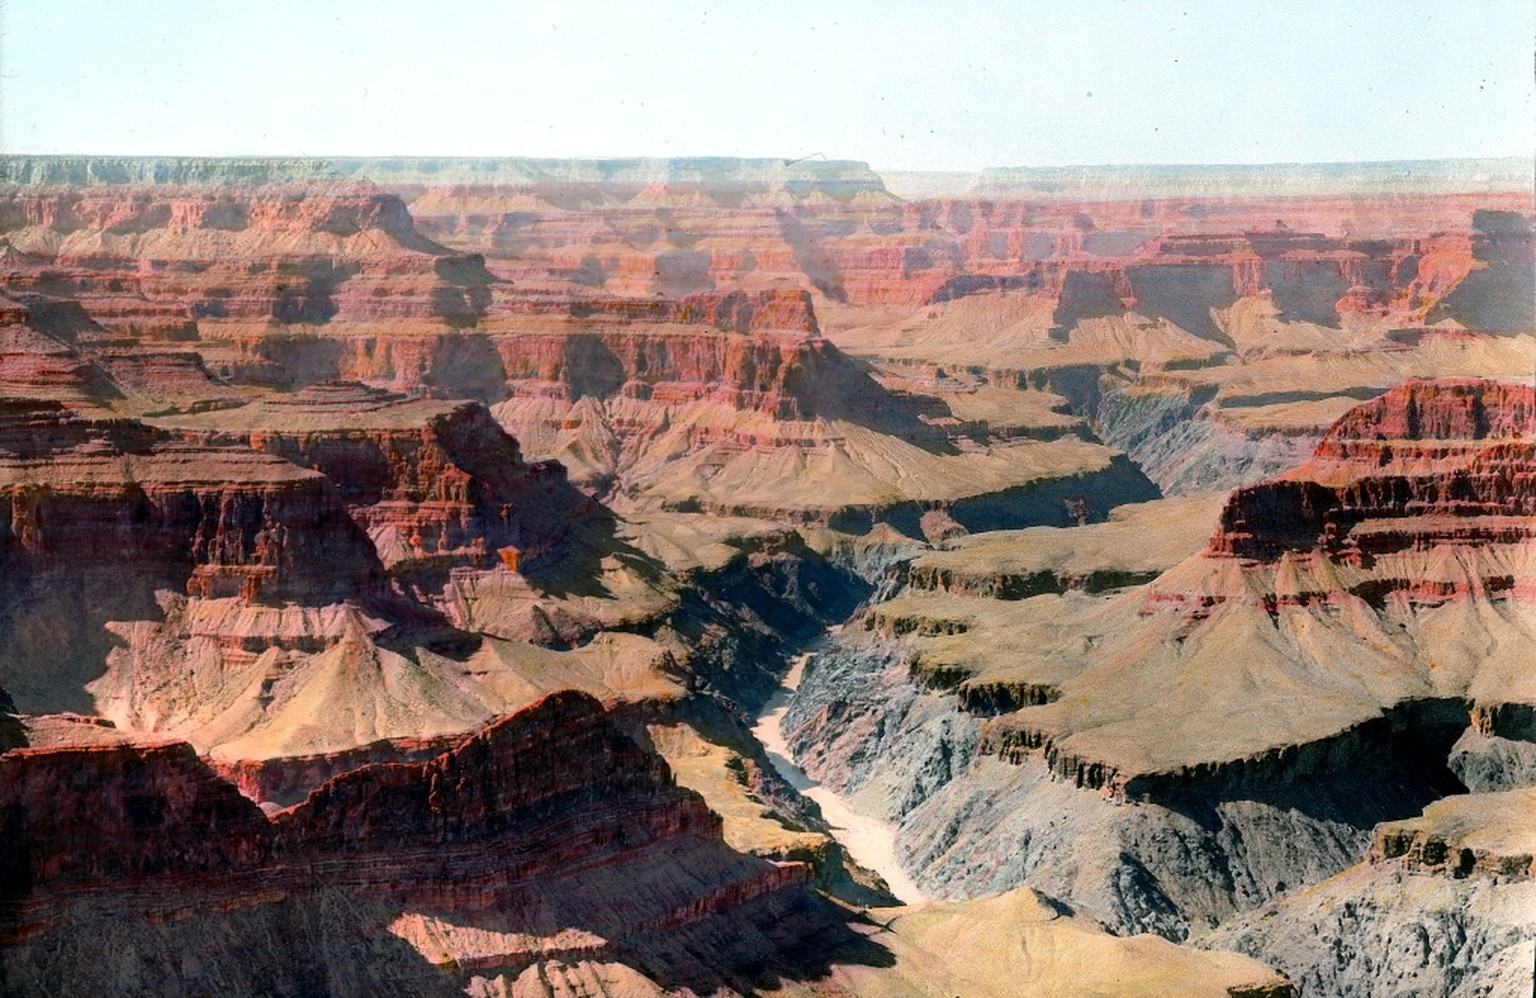 Blick über den Canyon
Fotograf:
Heim, Arnold 
Titel:
Grand Canyon of Colorado 
Beschreibung:
Blick über den Canyon 
Datierung:
1915